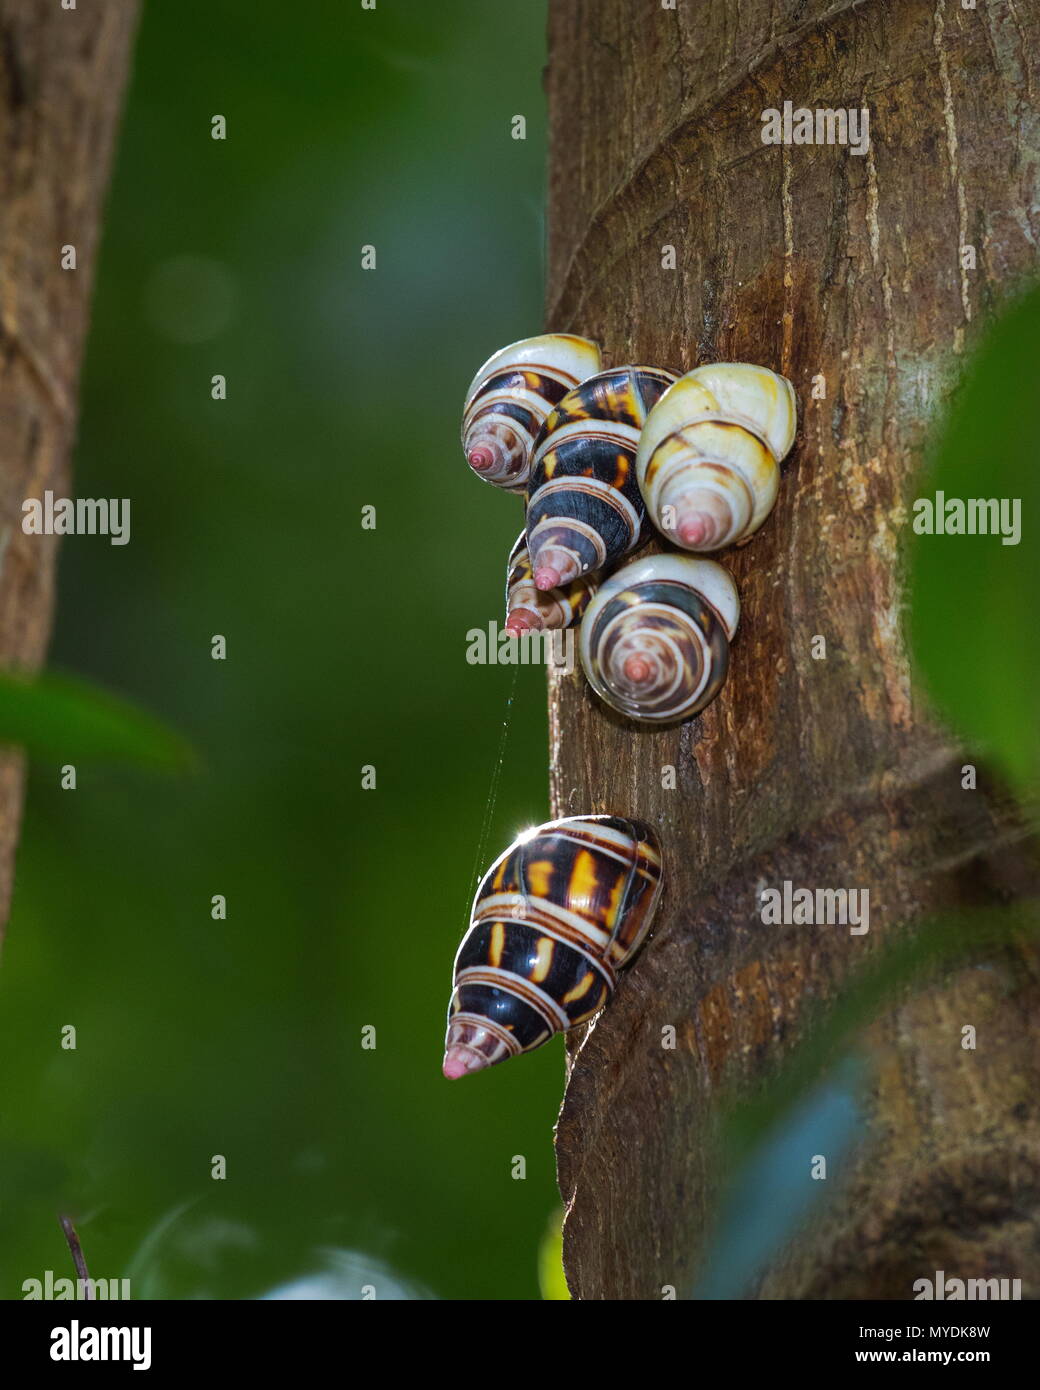 Liguus tree snails grouped on a tree trunk. Stock Photo